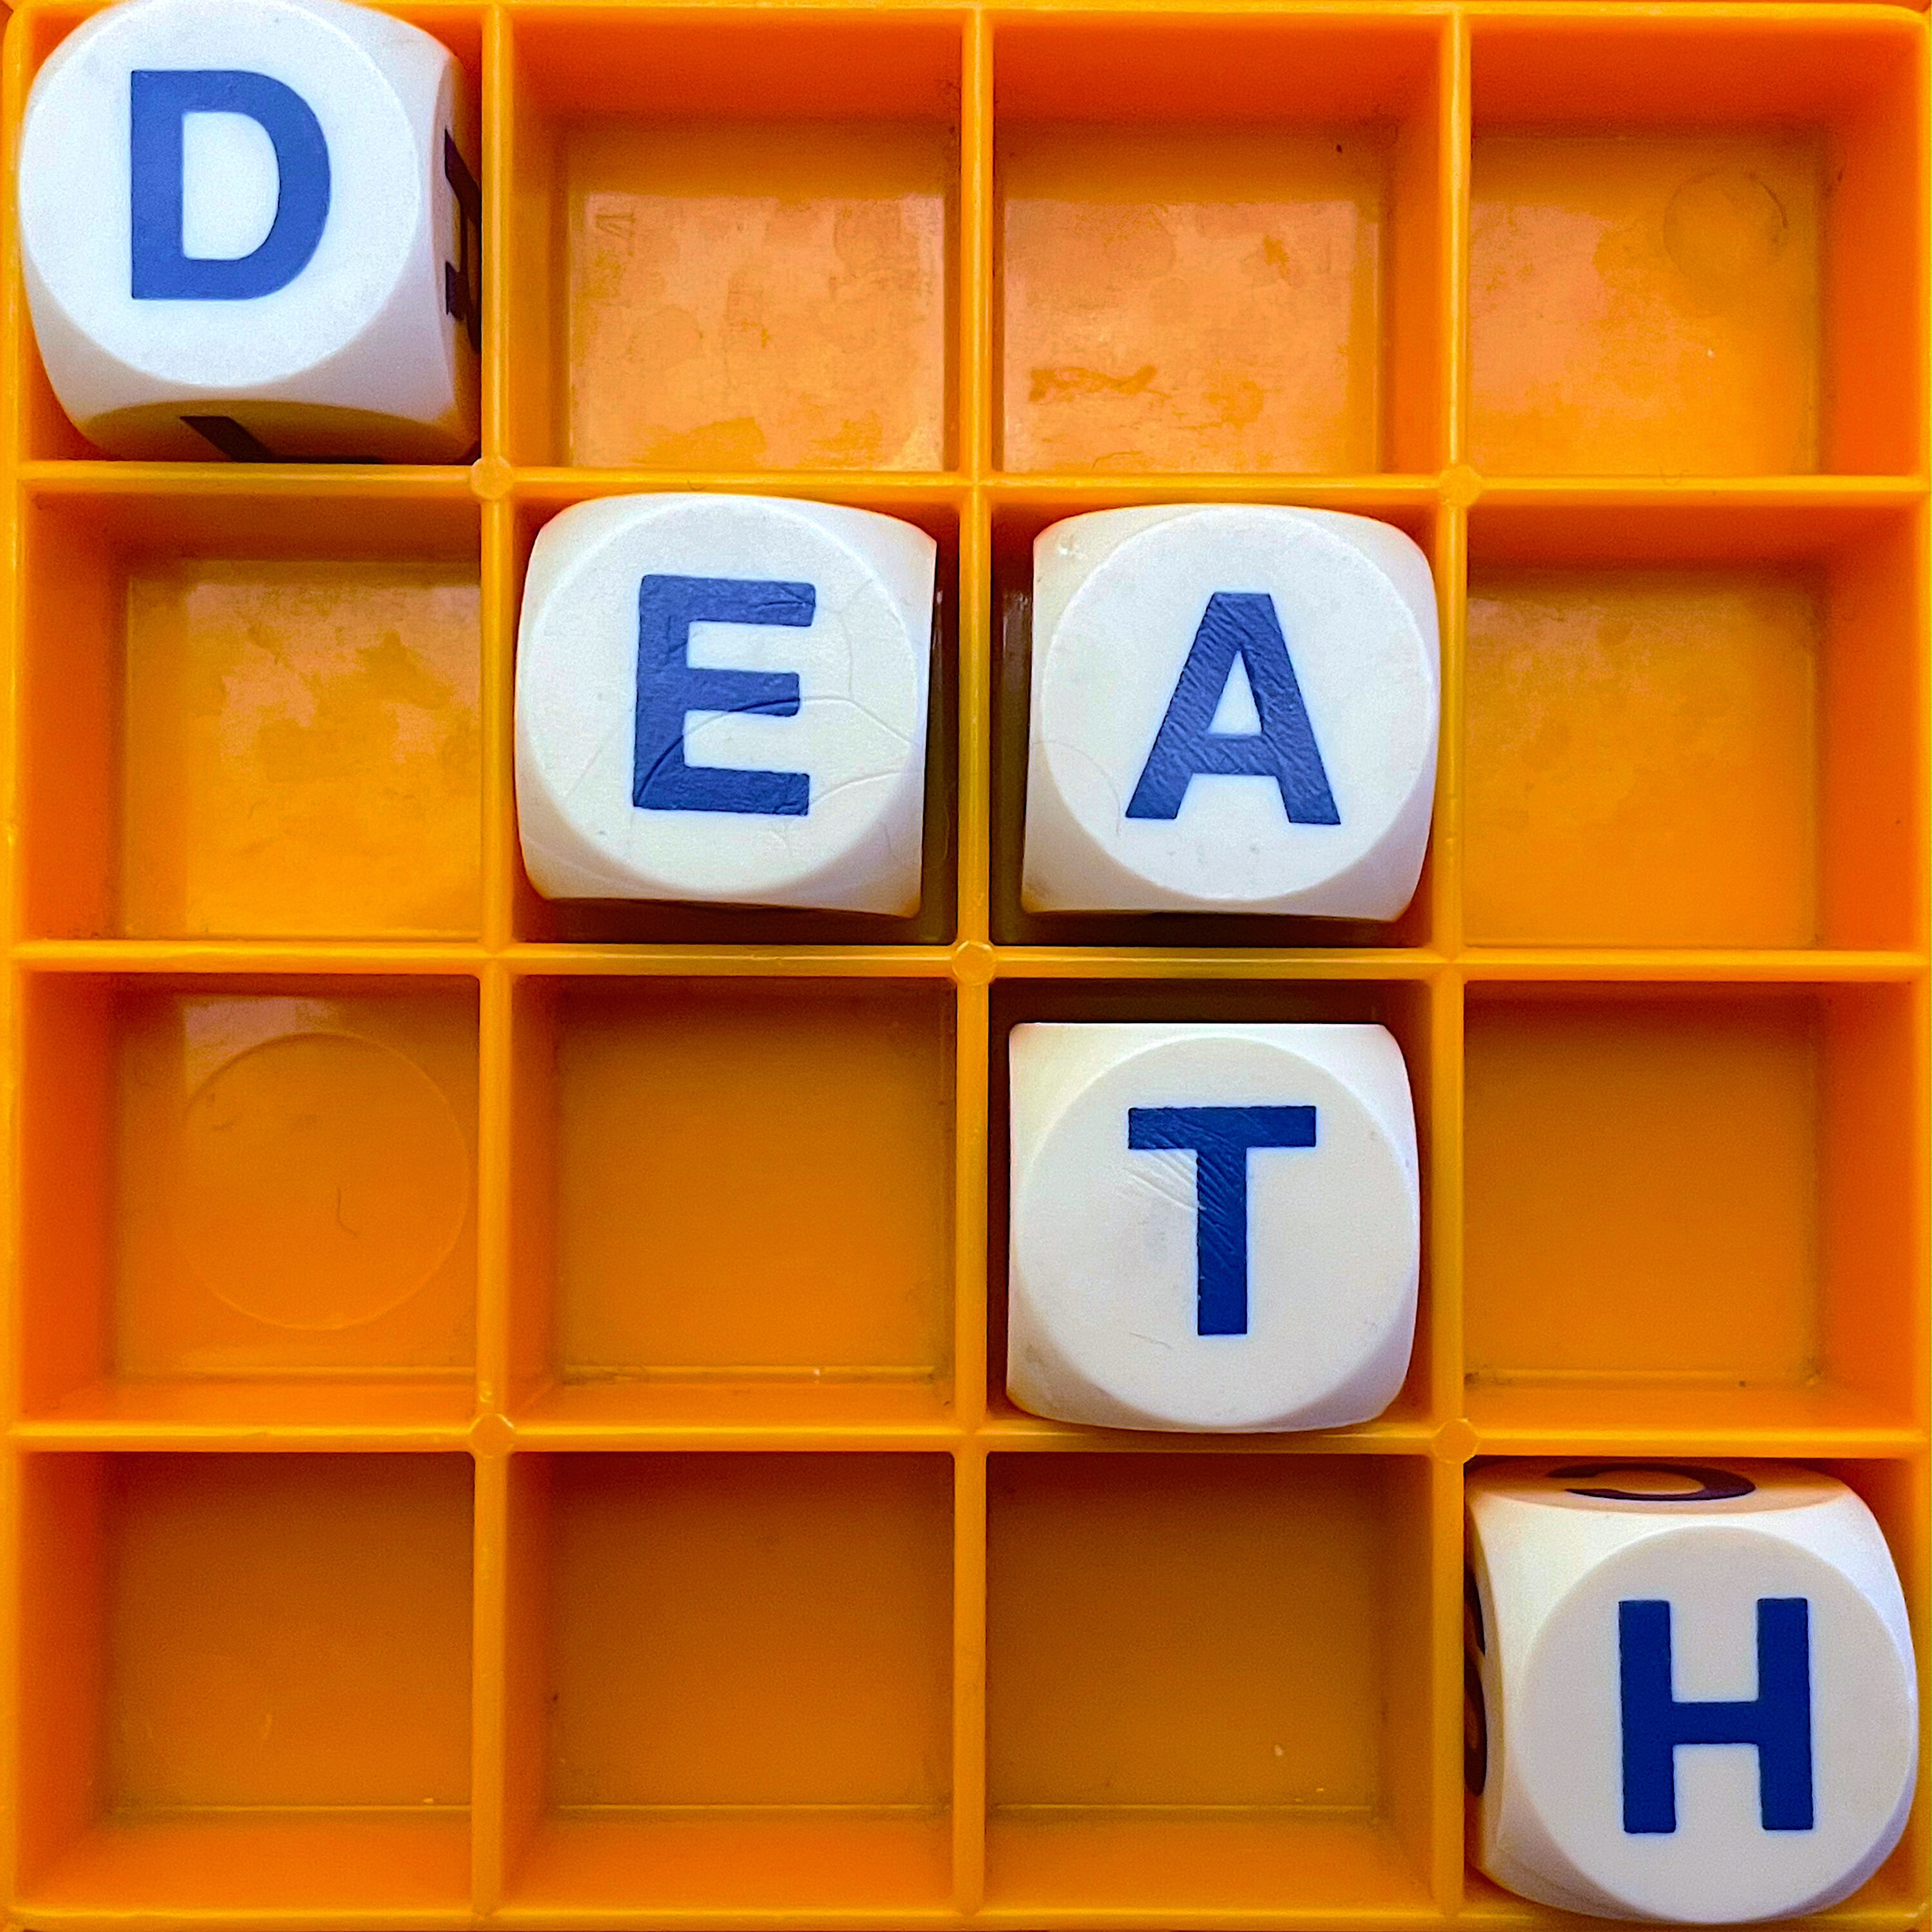 173. Death